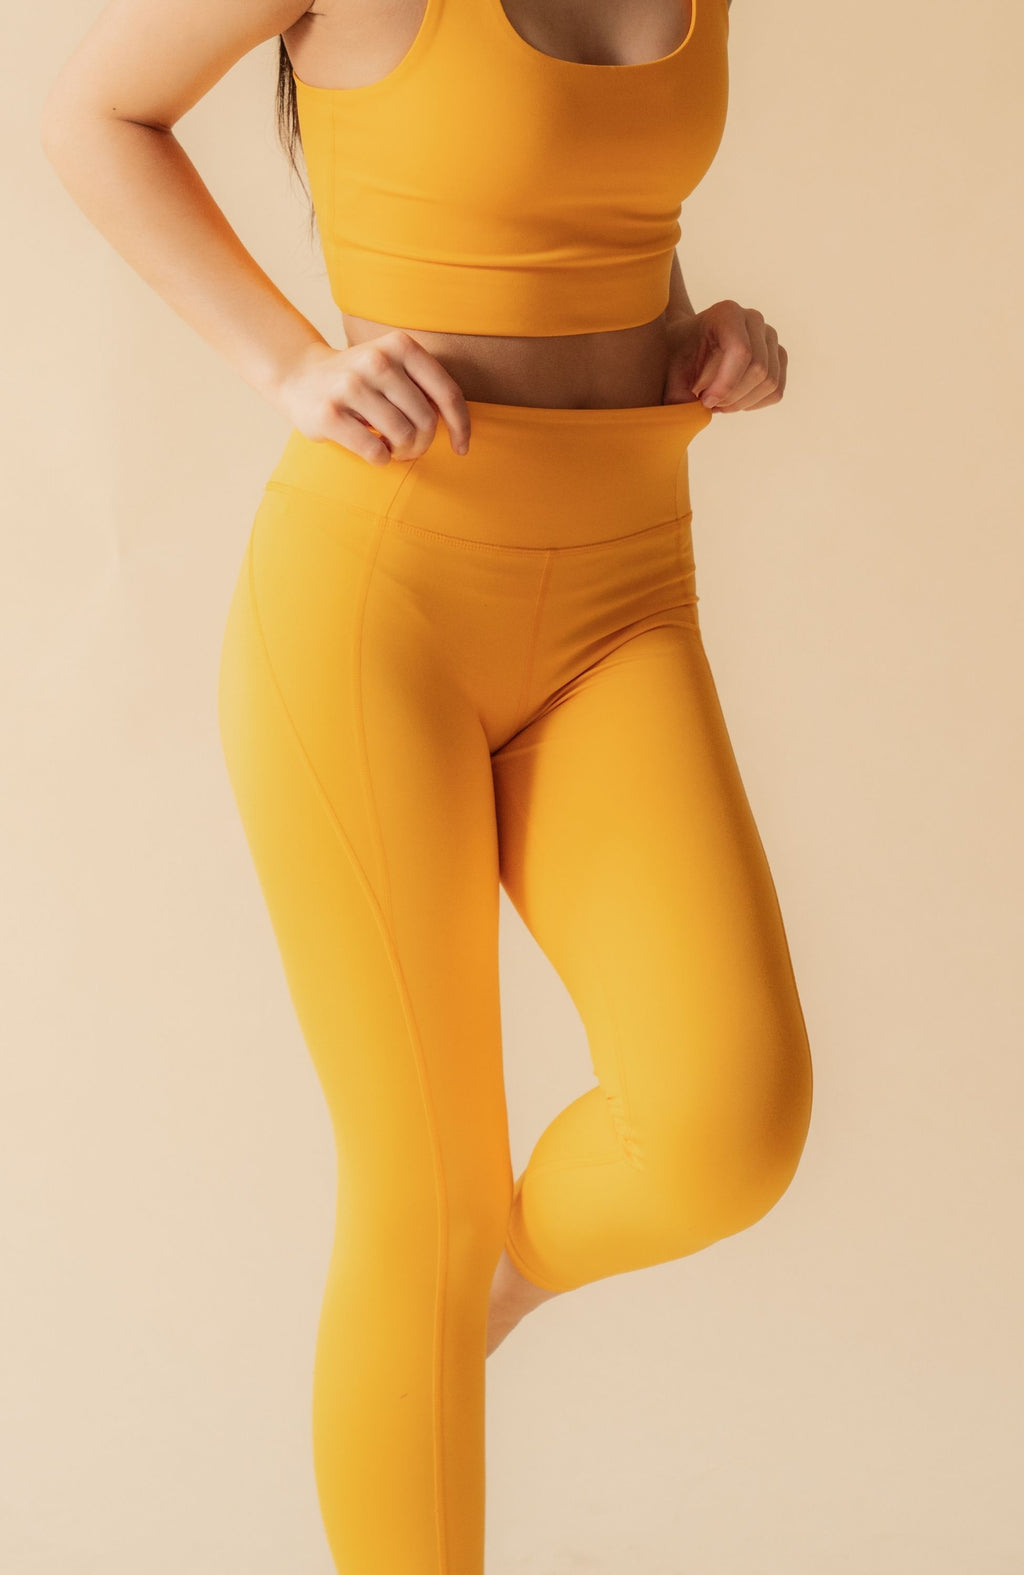 MUKDA C 🥀 on Instagram: “These yellow leggings got me feelin some type of  way 🥰 I literally feel like a little sun…